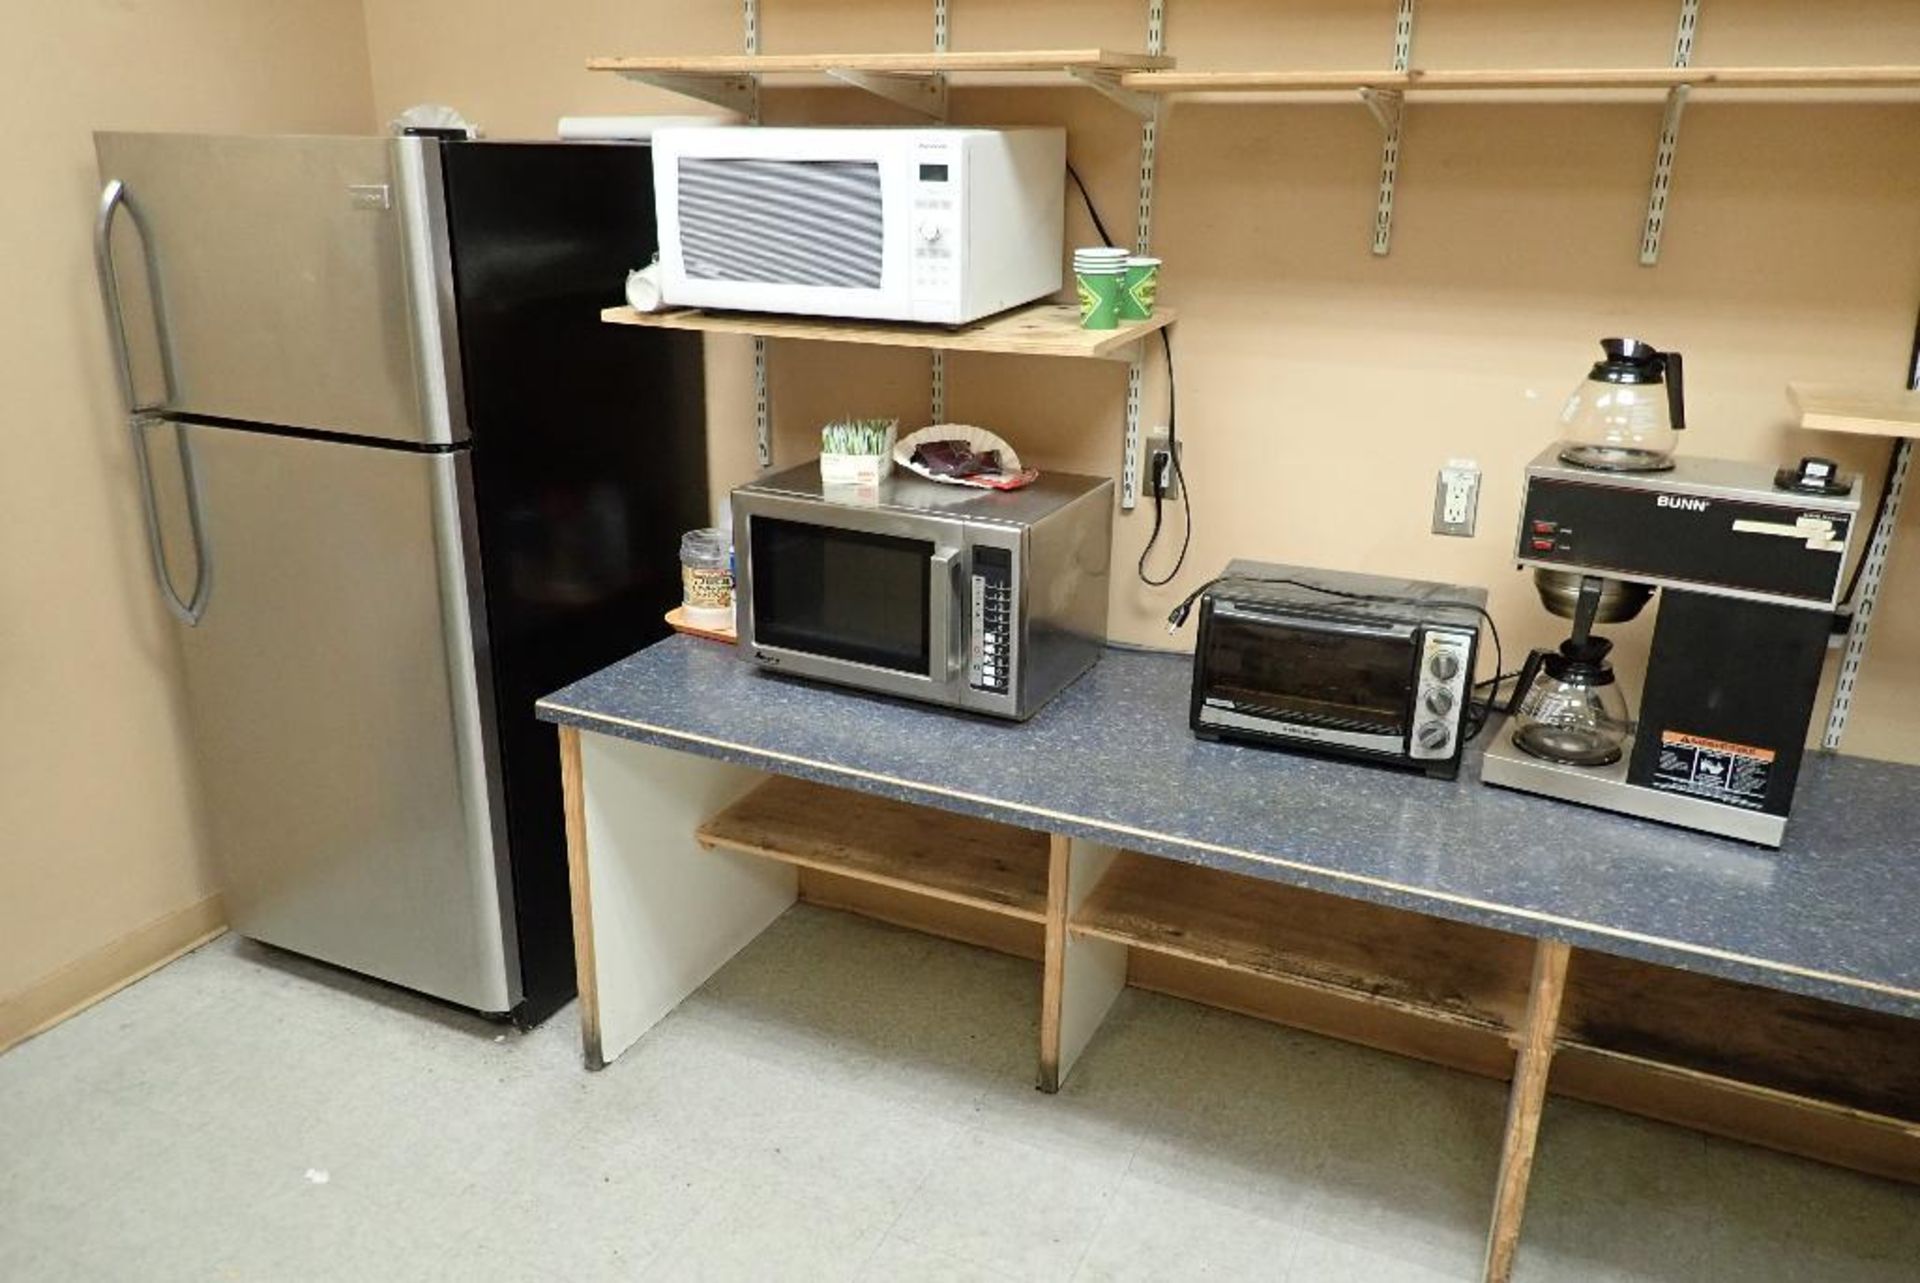 Contents of break room, folding tables, Frigidaire fridge/freezer, microwave, toaster, coffee maker. - Image 3 of 7